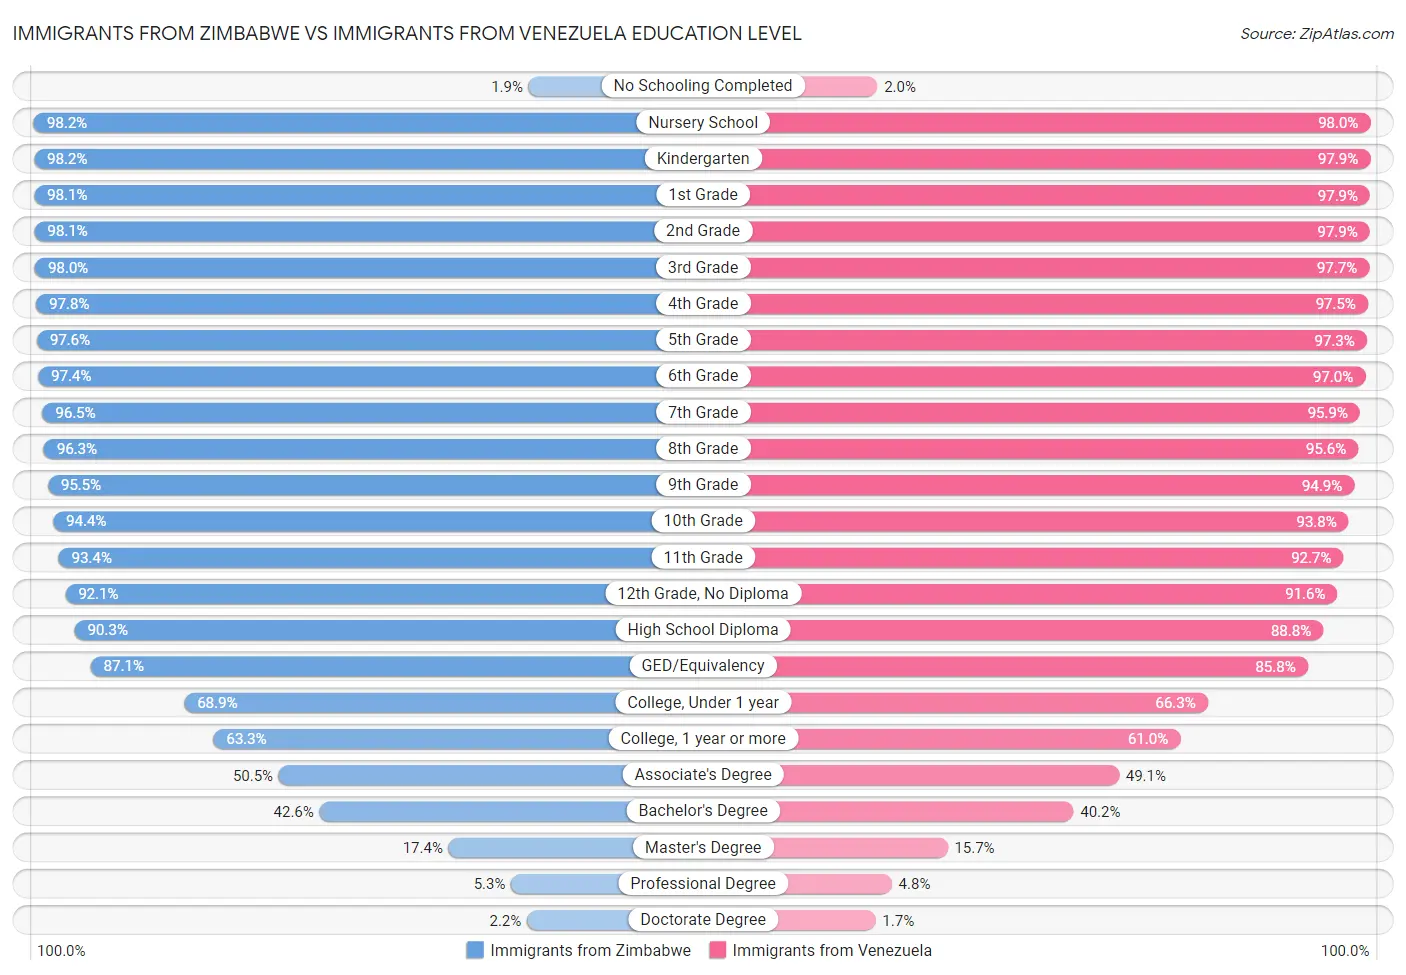 Immigrants from Zimbabwe vs Immigrants from Venezuela Education Level